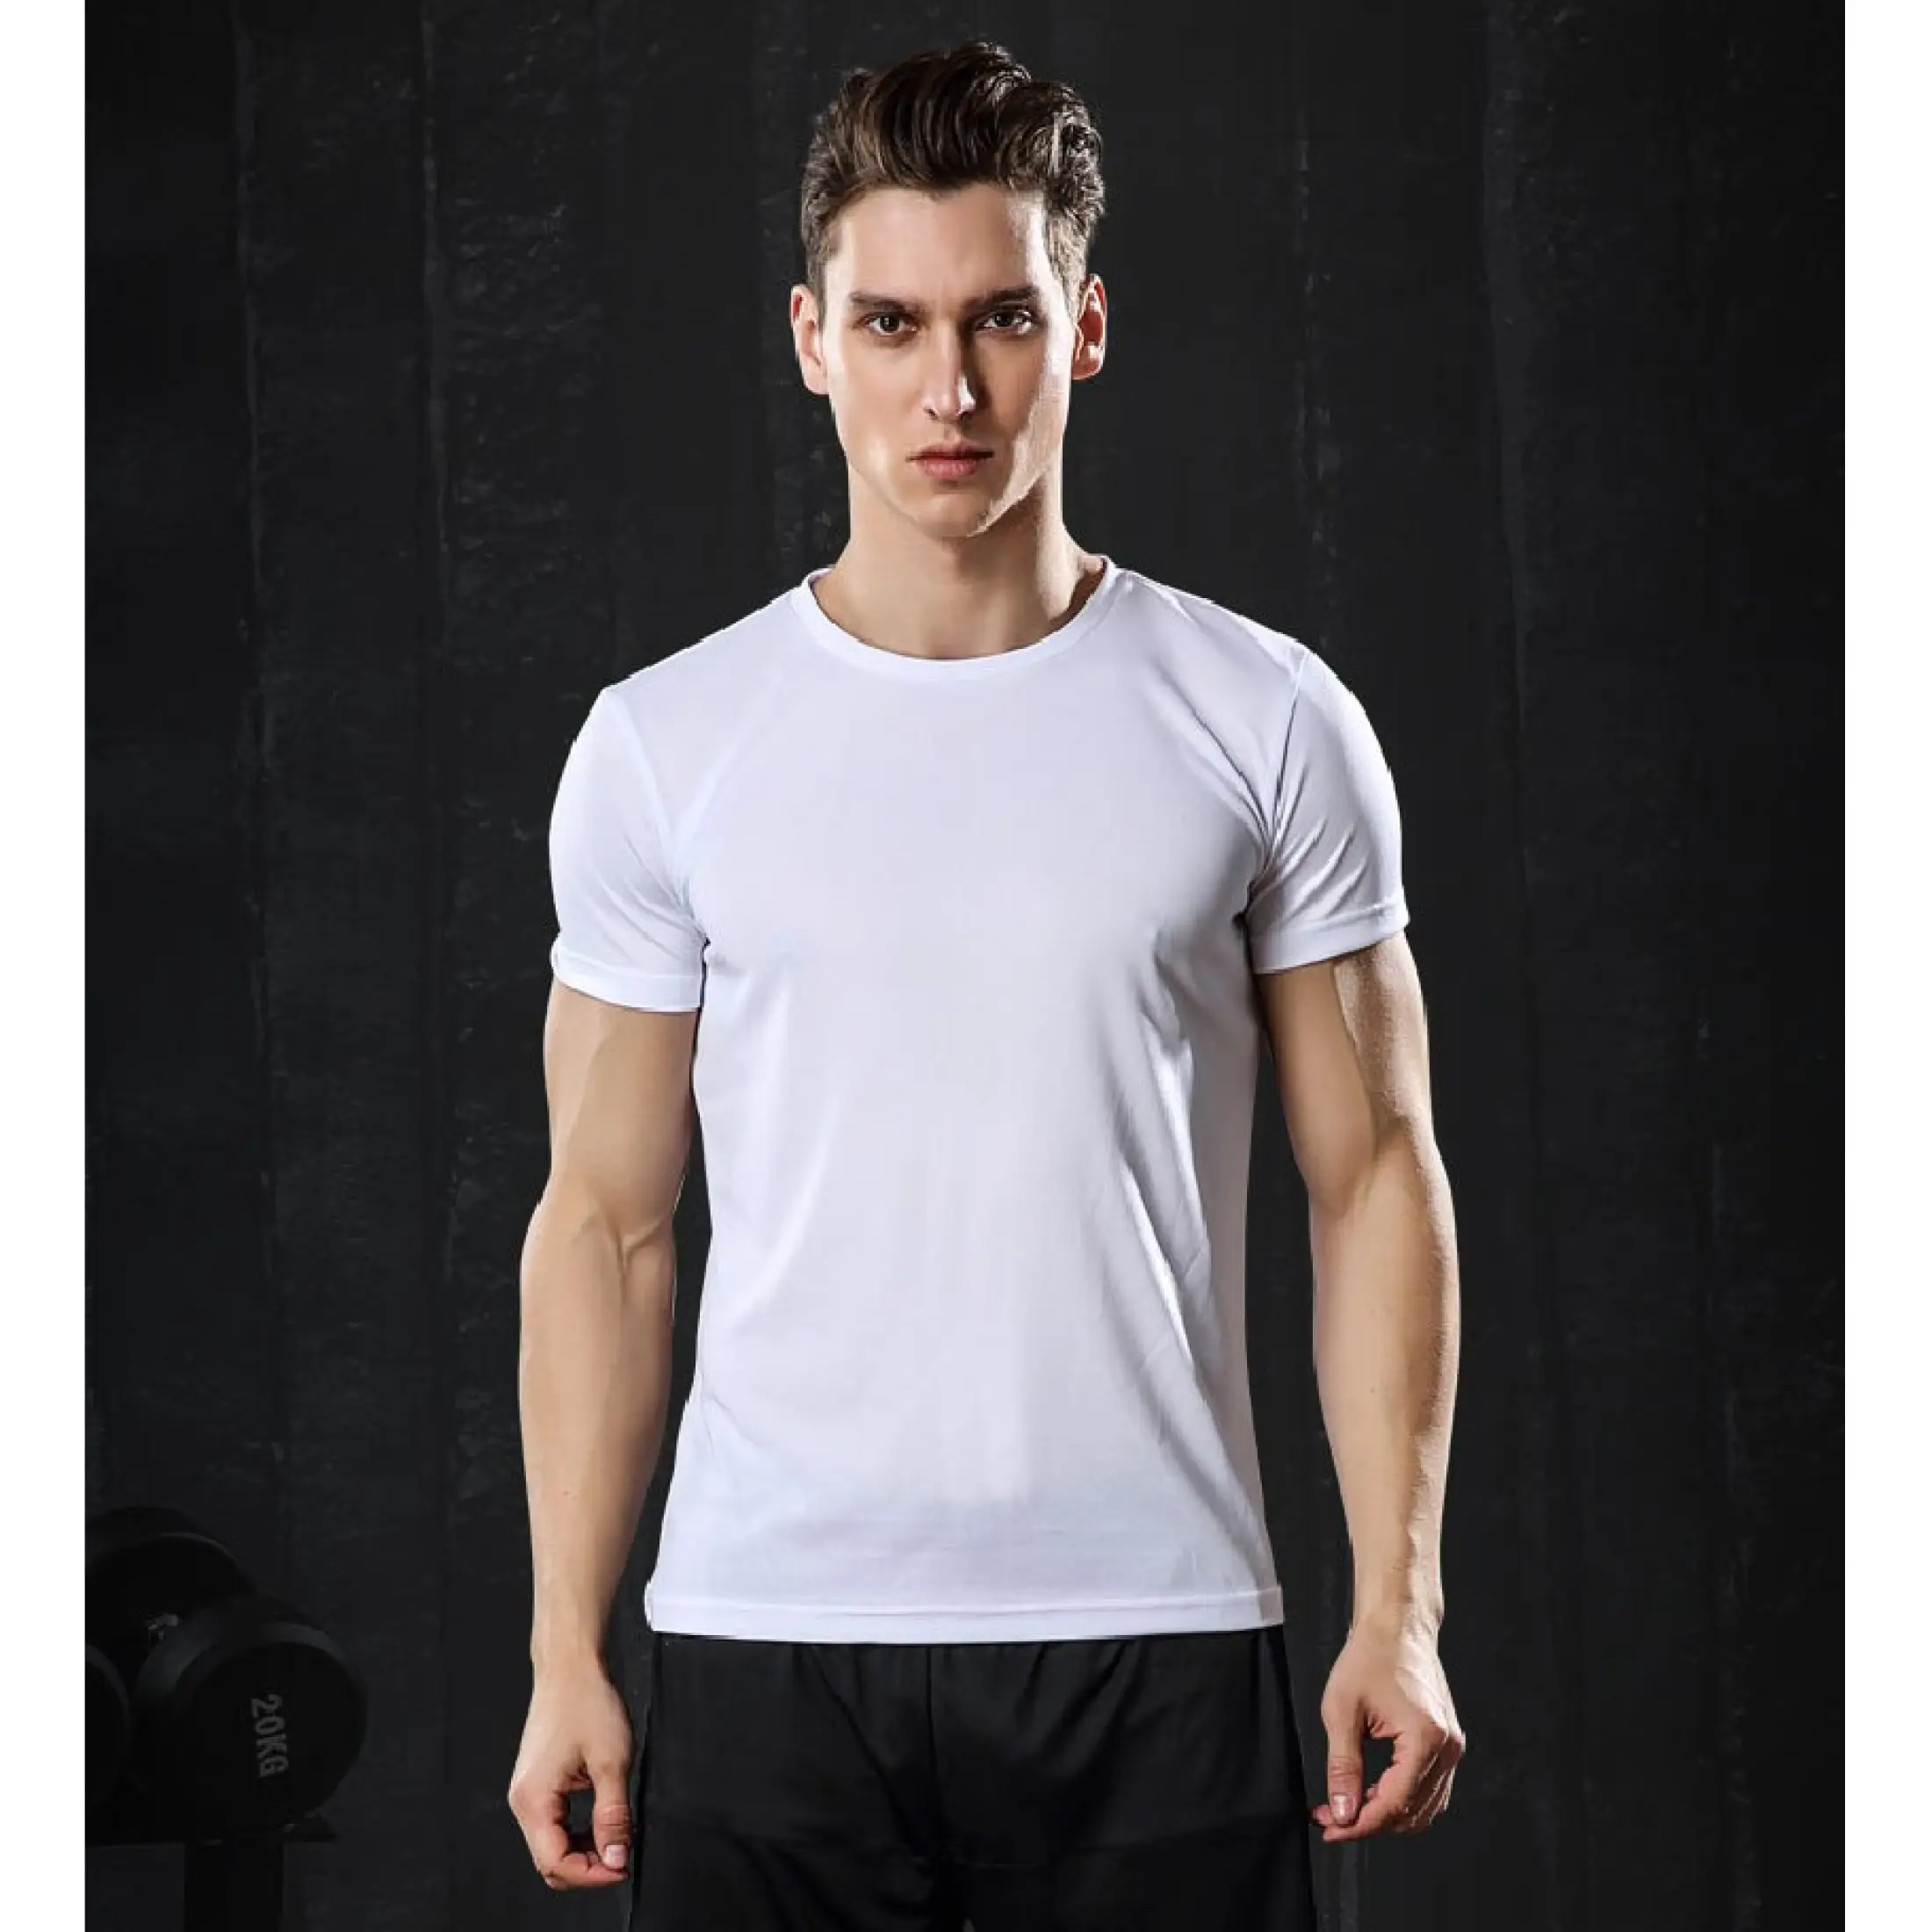 plain white dri fit shirt